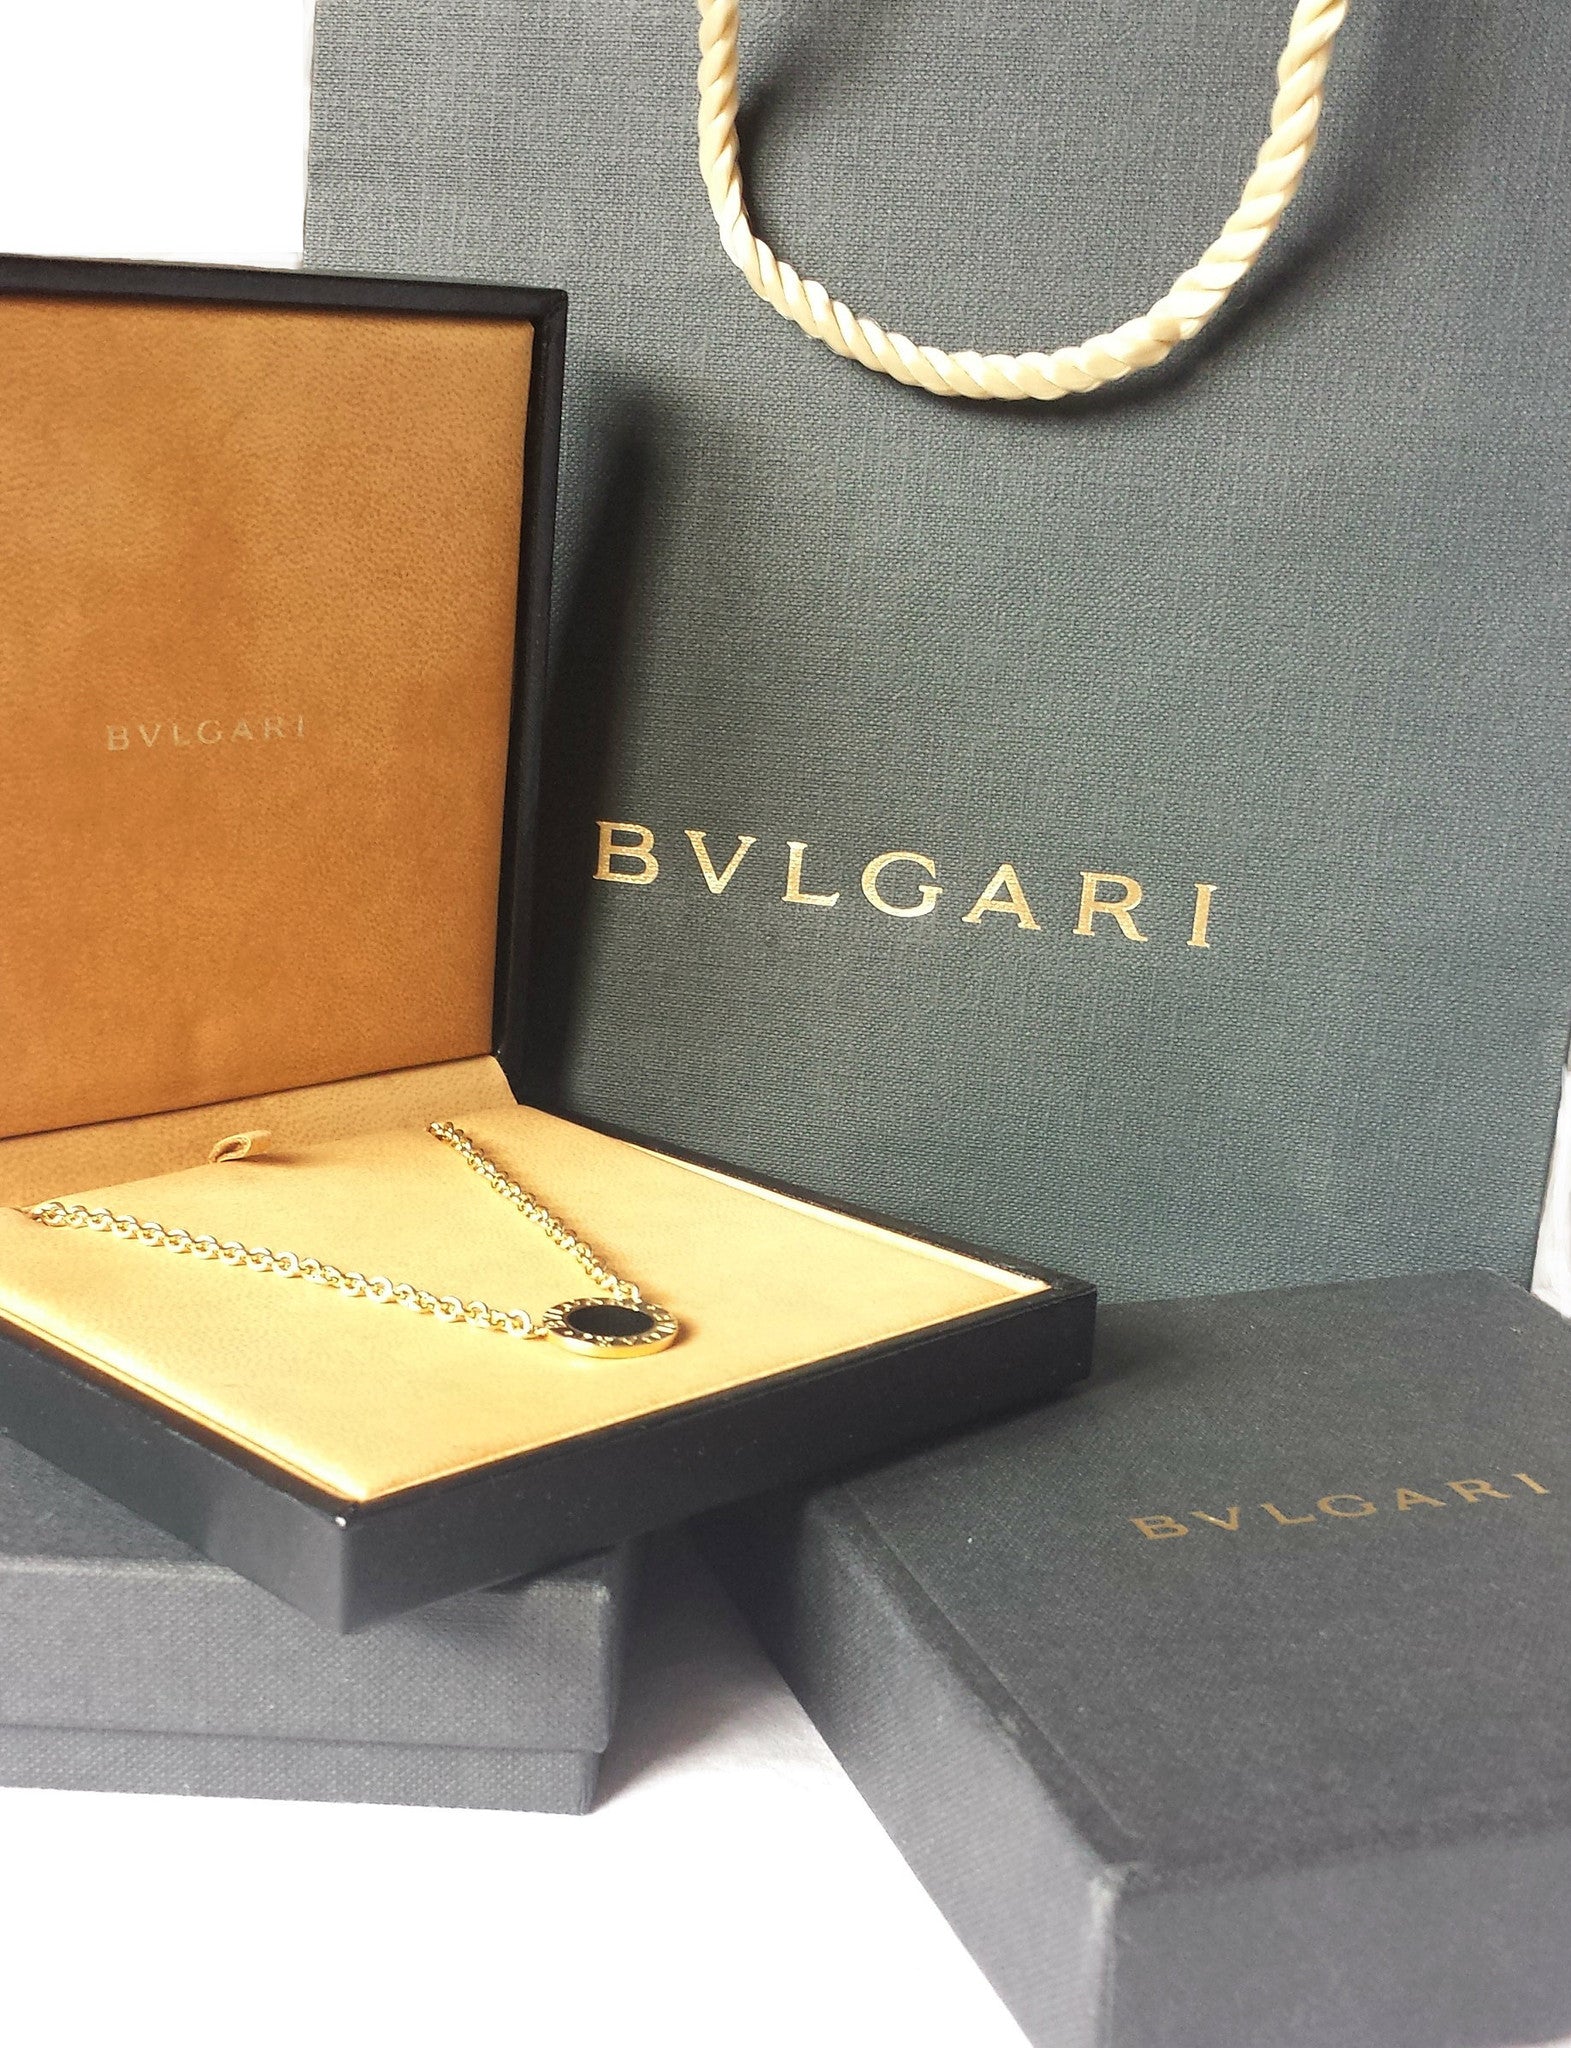 Bulgari Bvlgari Necklace in 18K Yellow Gold & Onyx, 16 inches ...